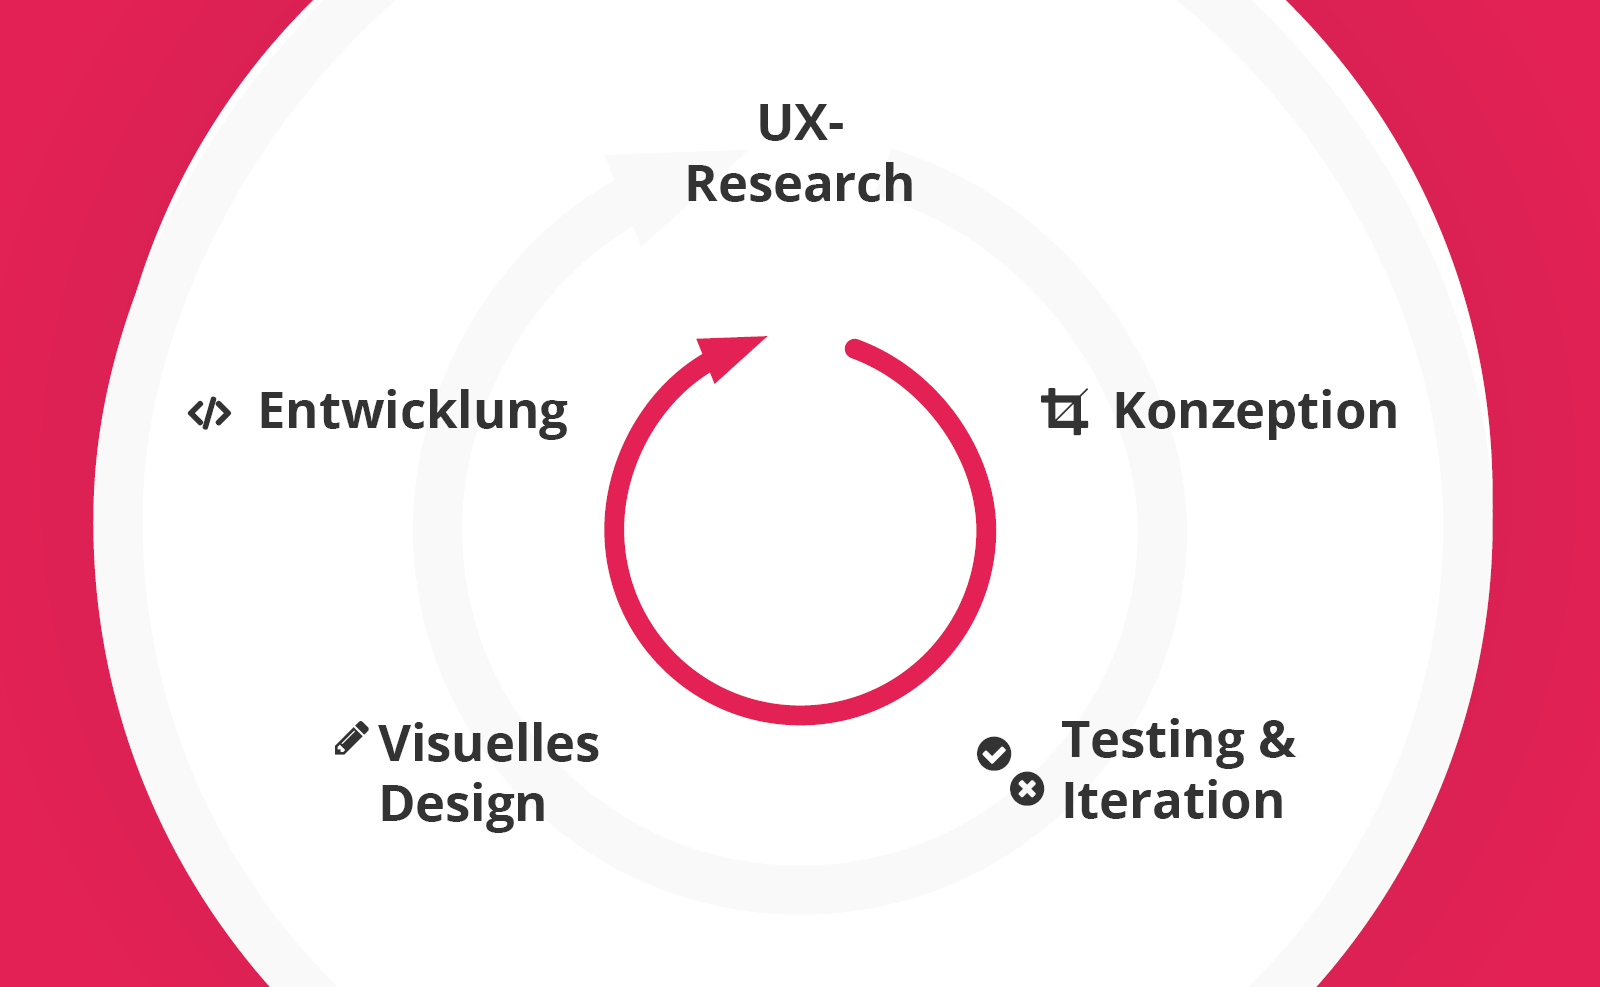 User-Centered-Design als Kern der UX-Strategie